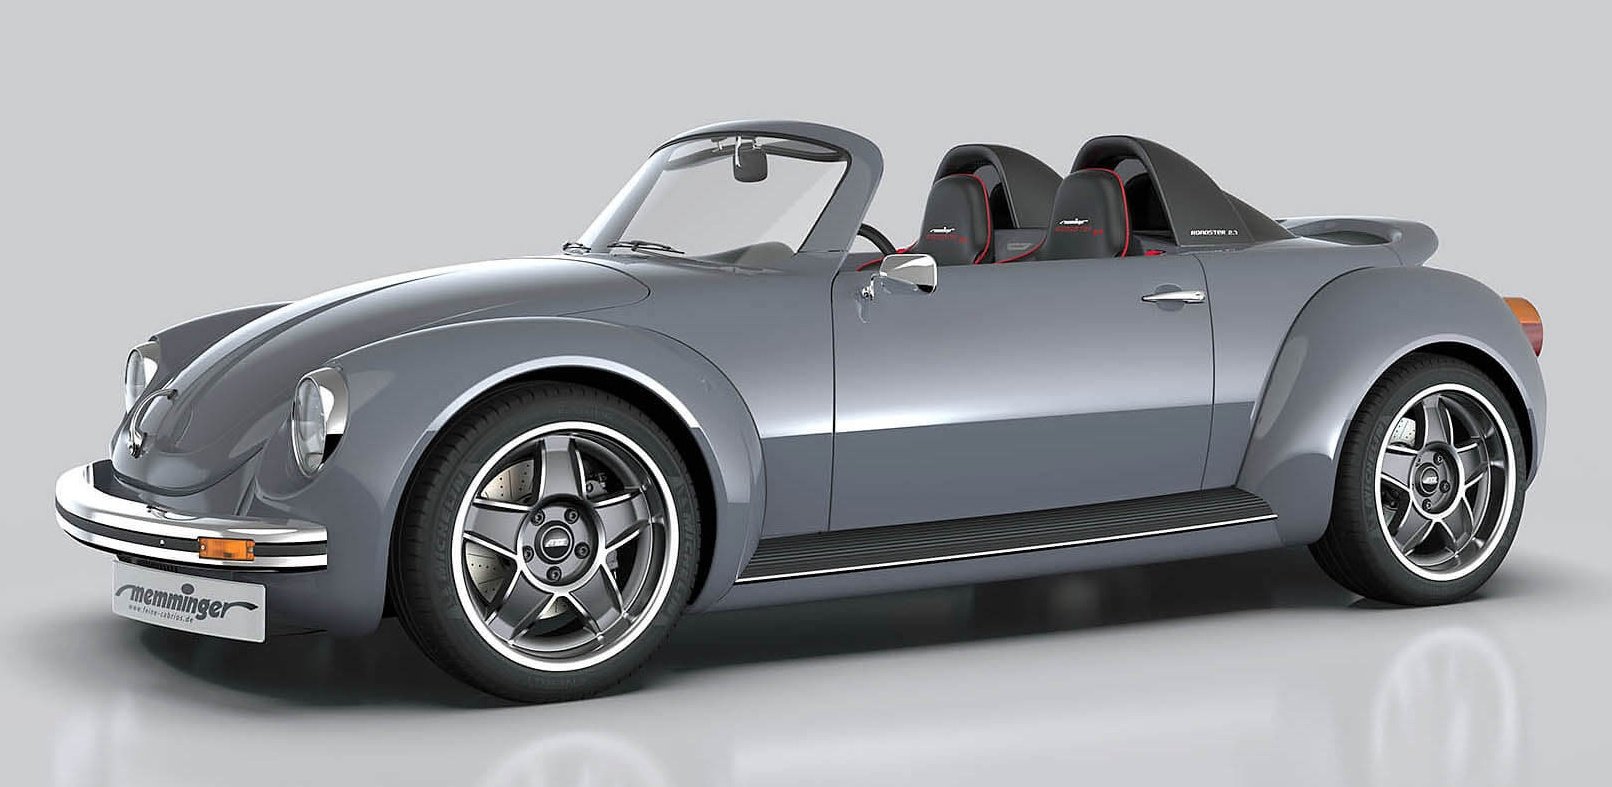 Memminger Roadster 2.7, 基 于 首 代 Volkswagen Beetle 的 全 新 双 座 